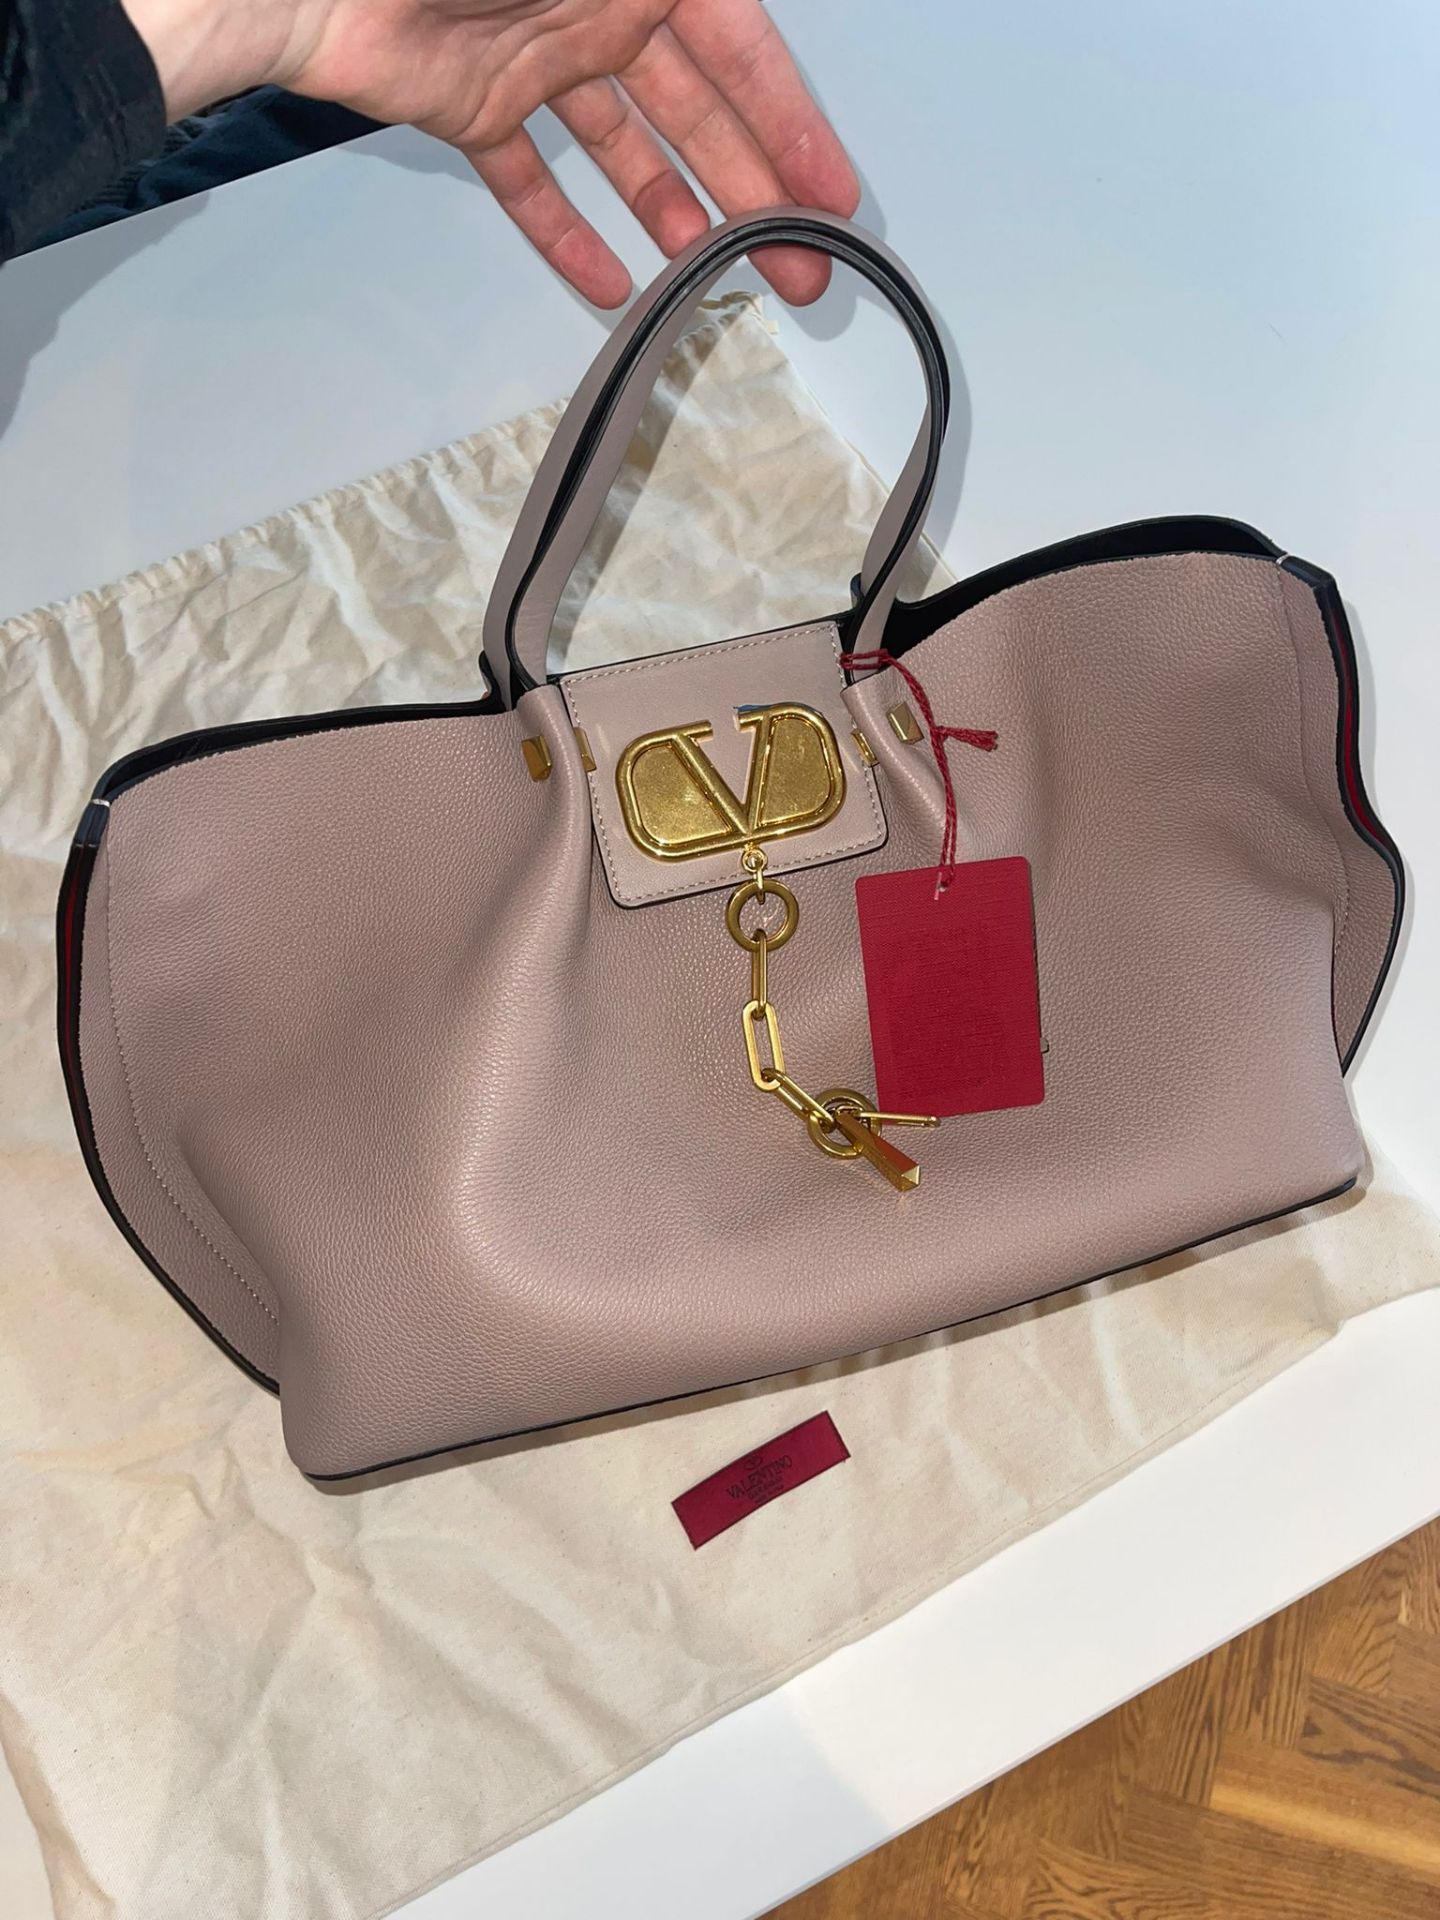 Valentino Garavani Large Tote Pastel Bag. RRP £1,810. - Image 2 of 5